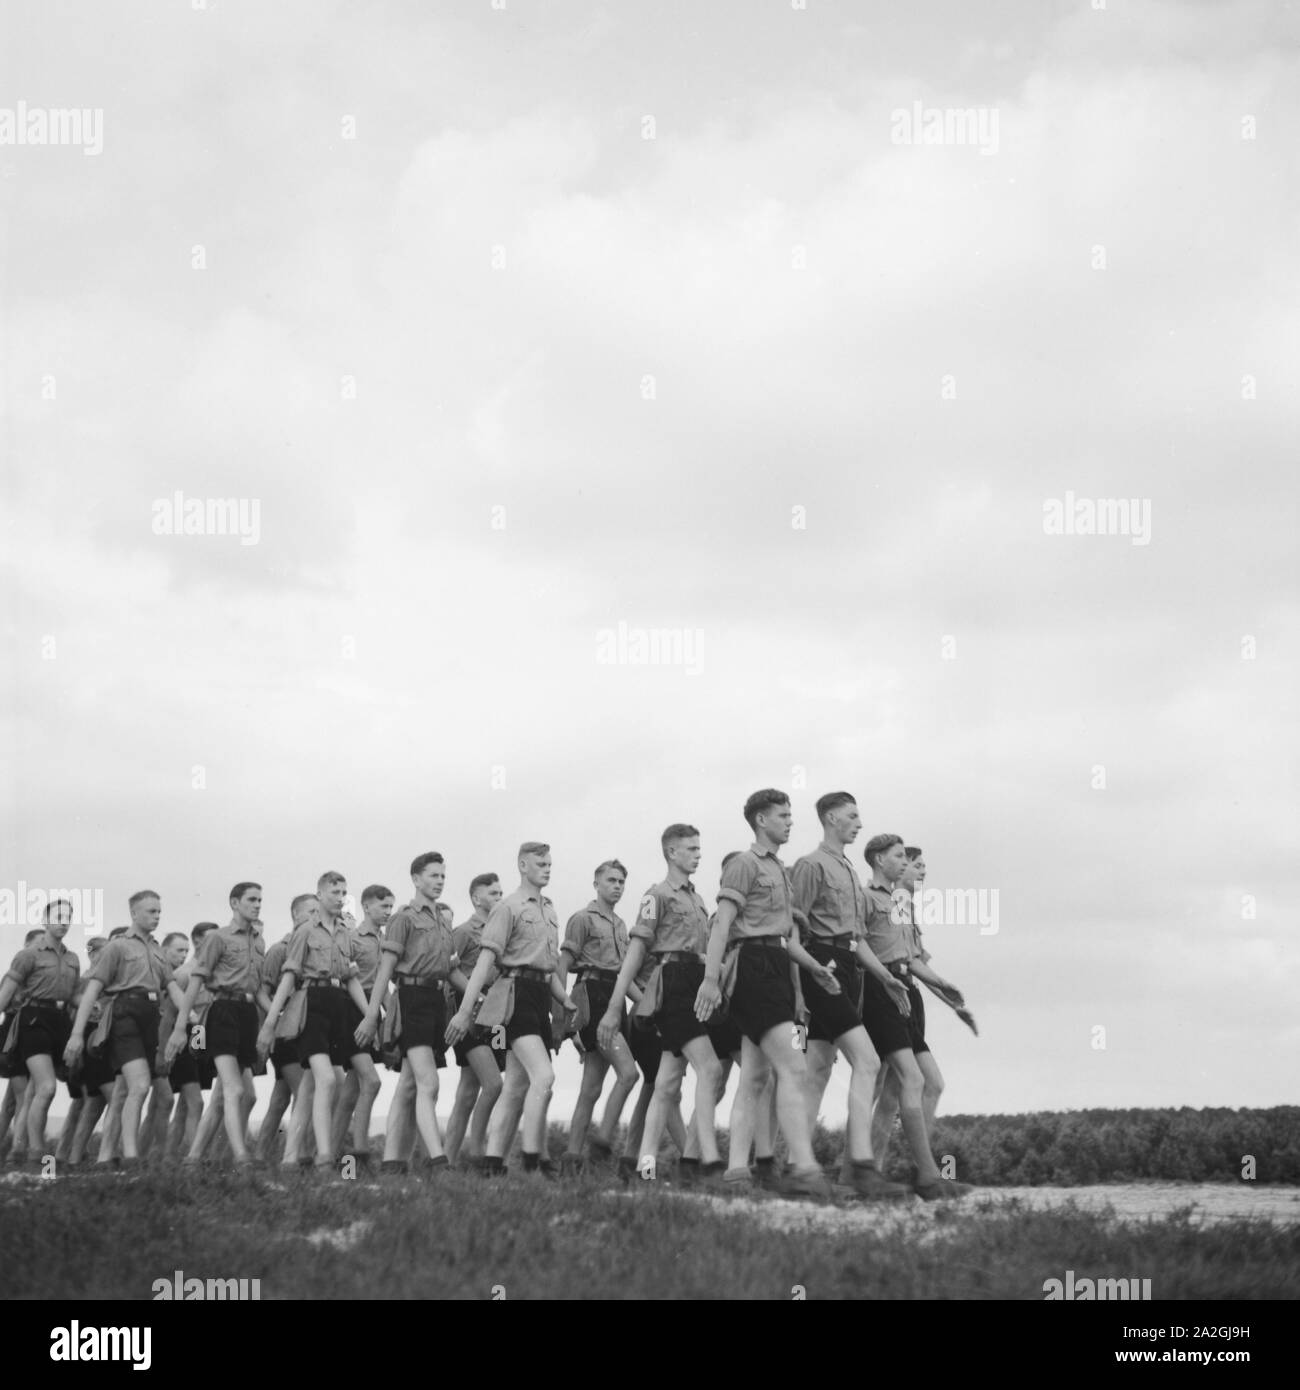 Dans Hitlejugend marschiert Reihen dans Westfalen, Deutschland 1930 er Jahre. Jeunes Hitler marcher en lignes de Westfalia, Allemagne 1930. Banque D'Images